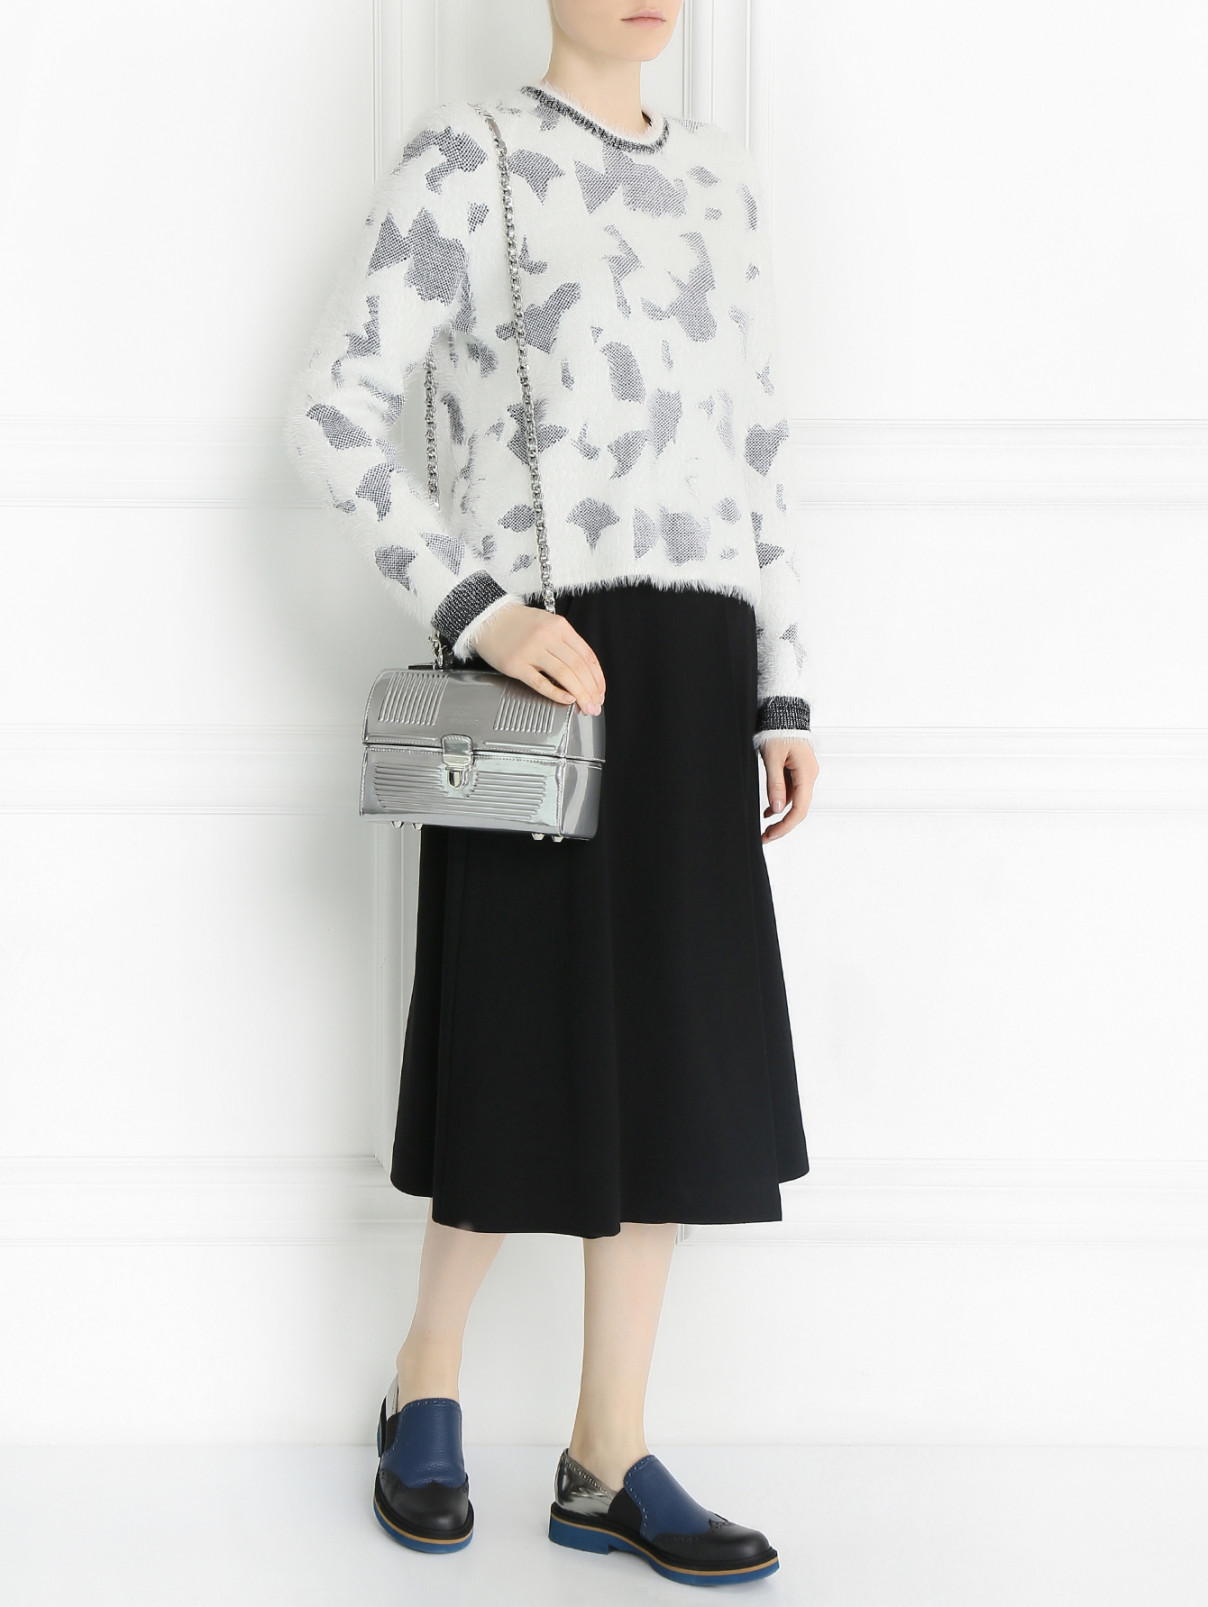 Сумка-сундучок на цепочке Moschino Couture  –  Модель Общий вид  – Цвет:  Серый